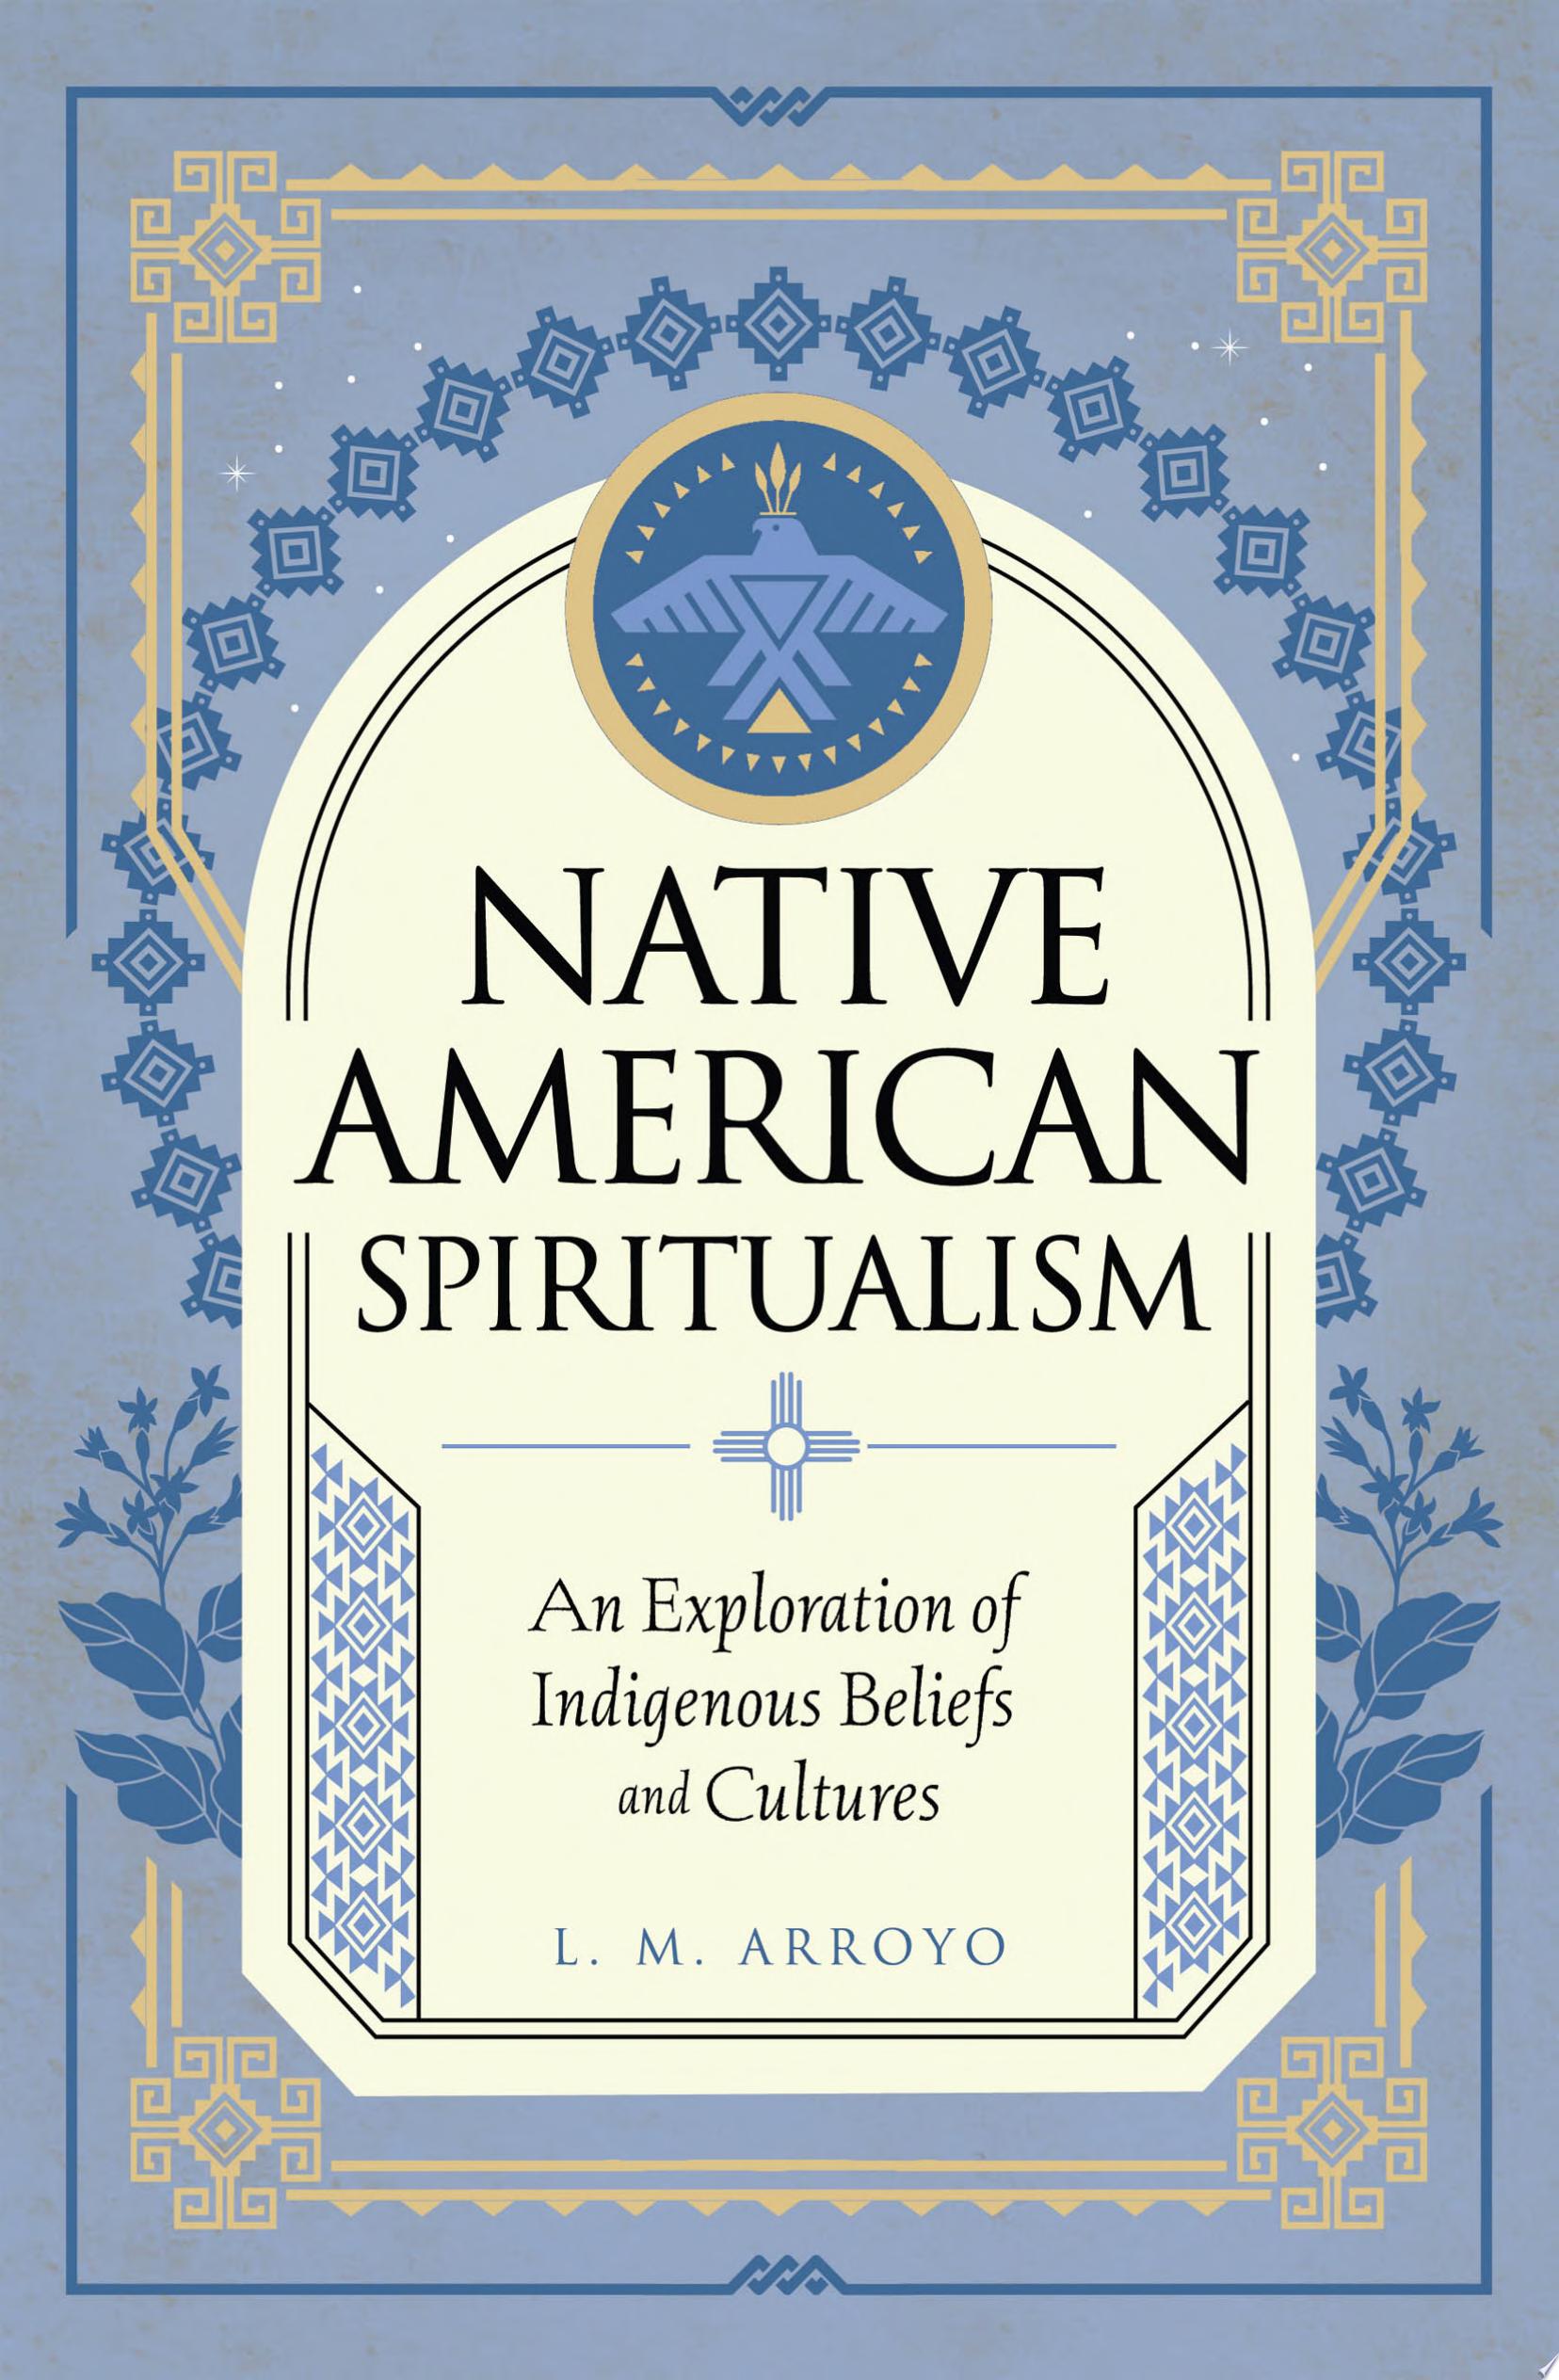 Image for "Native American Spiritualism"